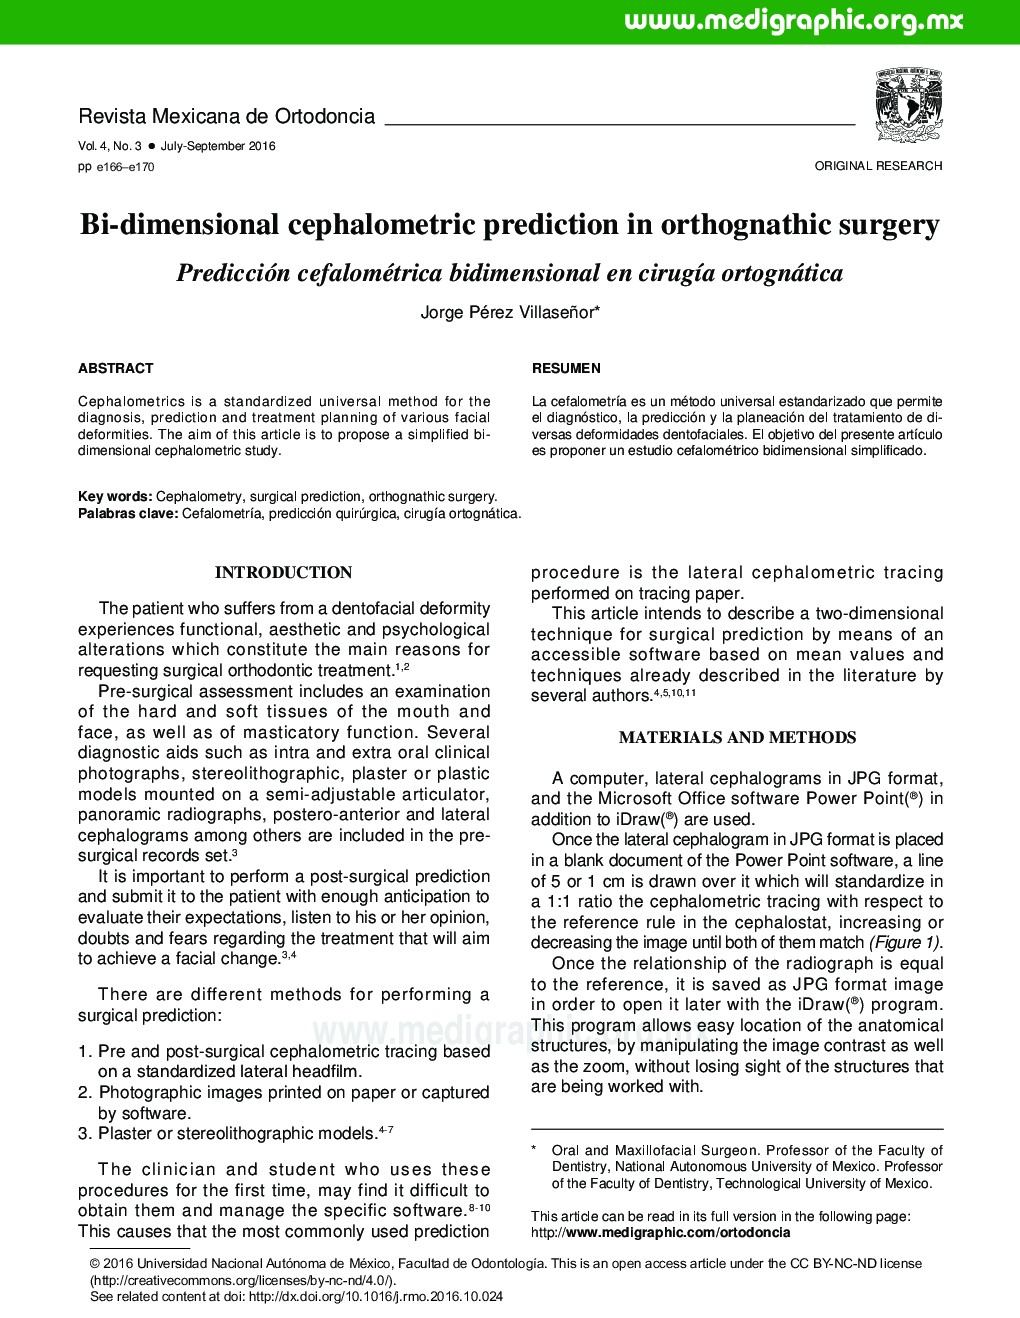 Bi-dimensional cephalometric prediction in orthognathic surgery